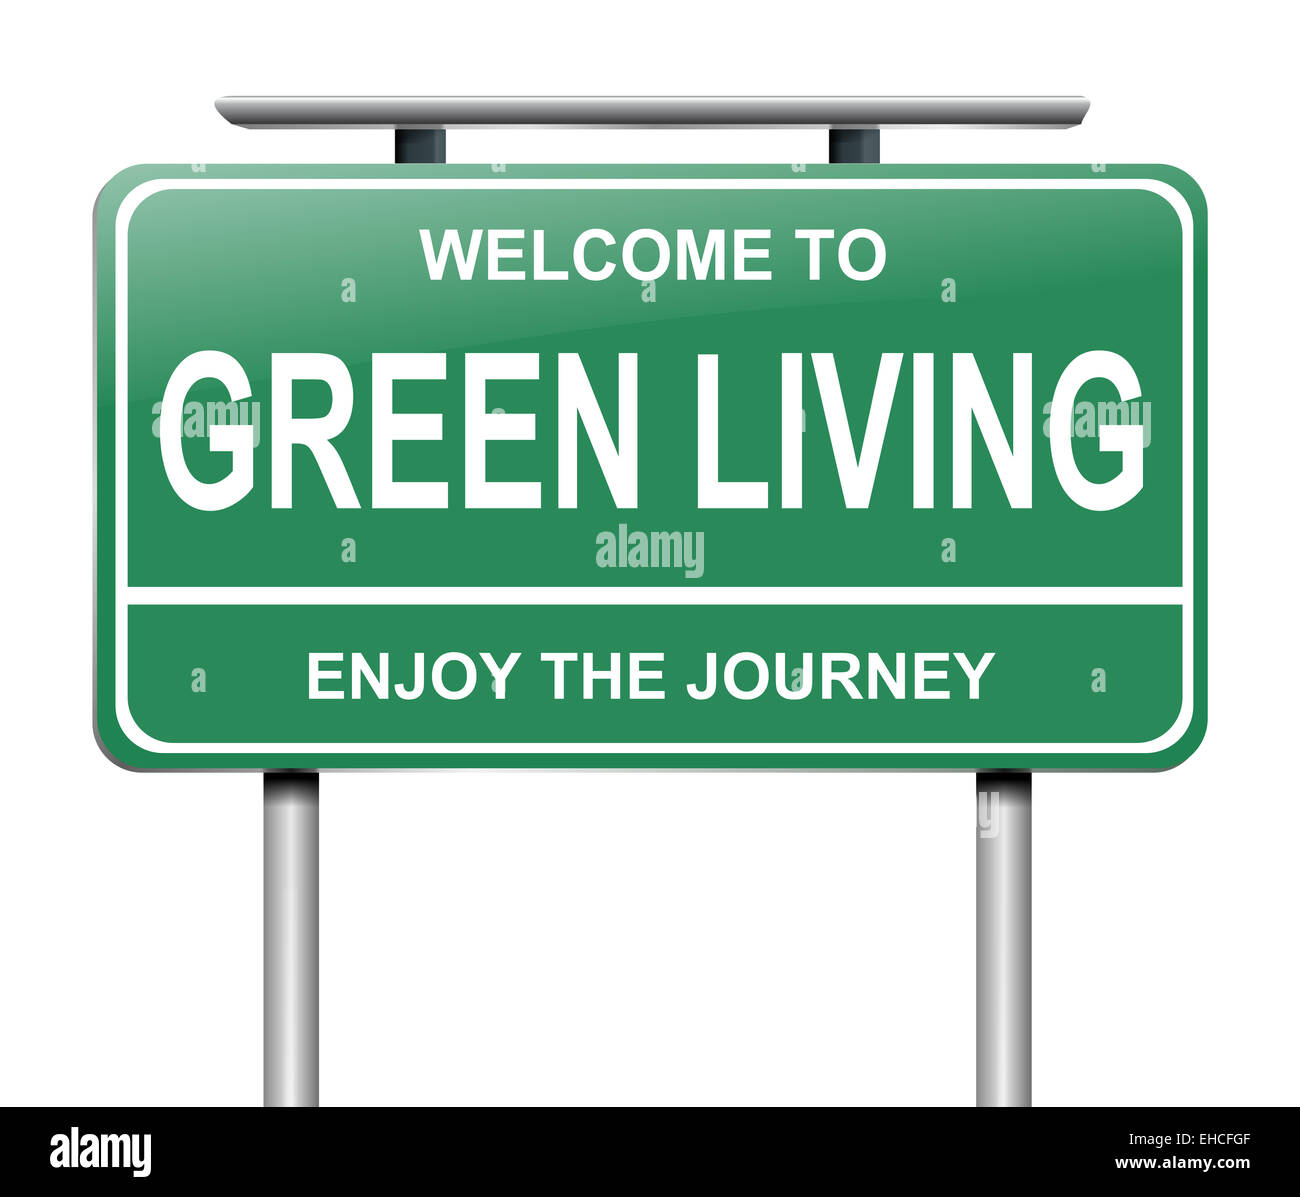 Green living concept. Stock Photo